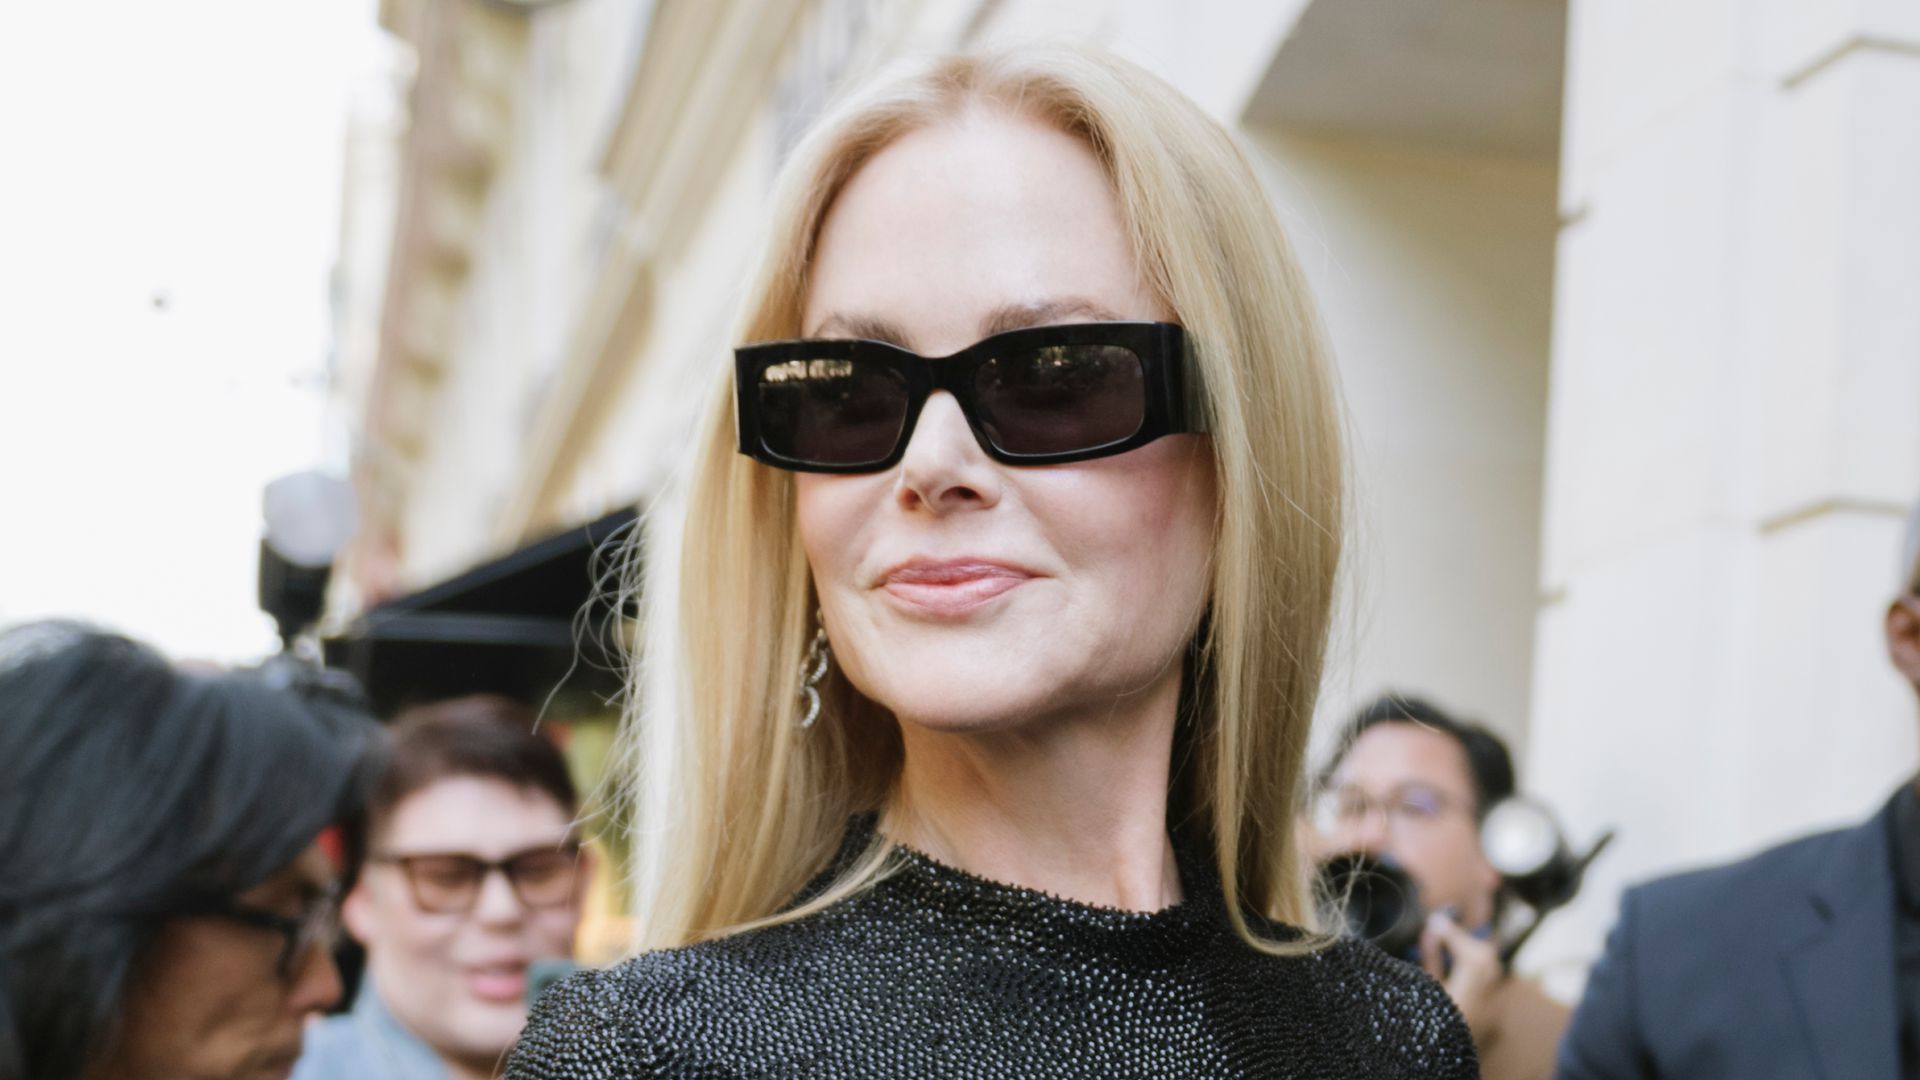 Nicole Kidman in black dress and sunglasses